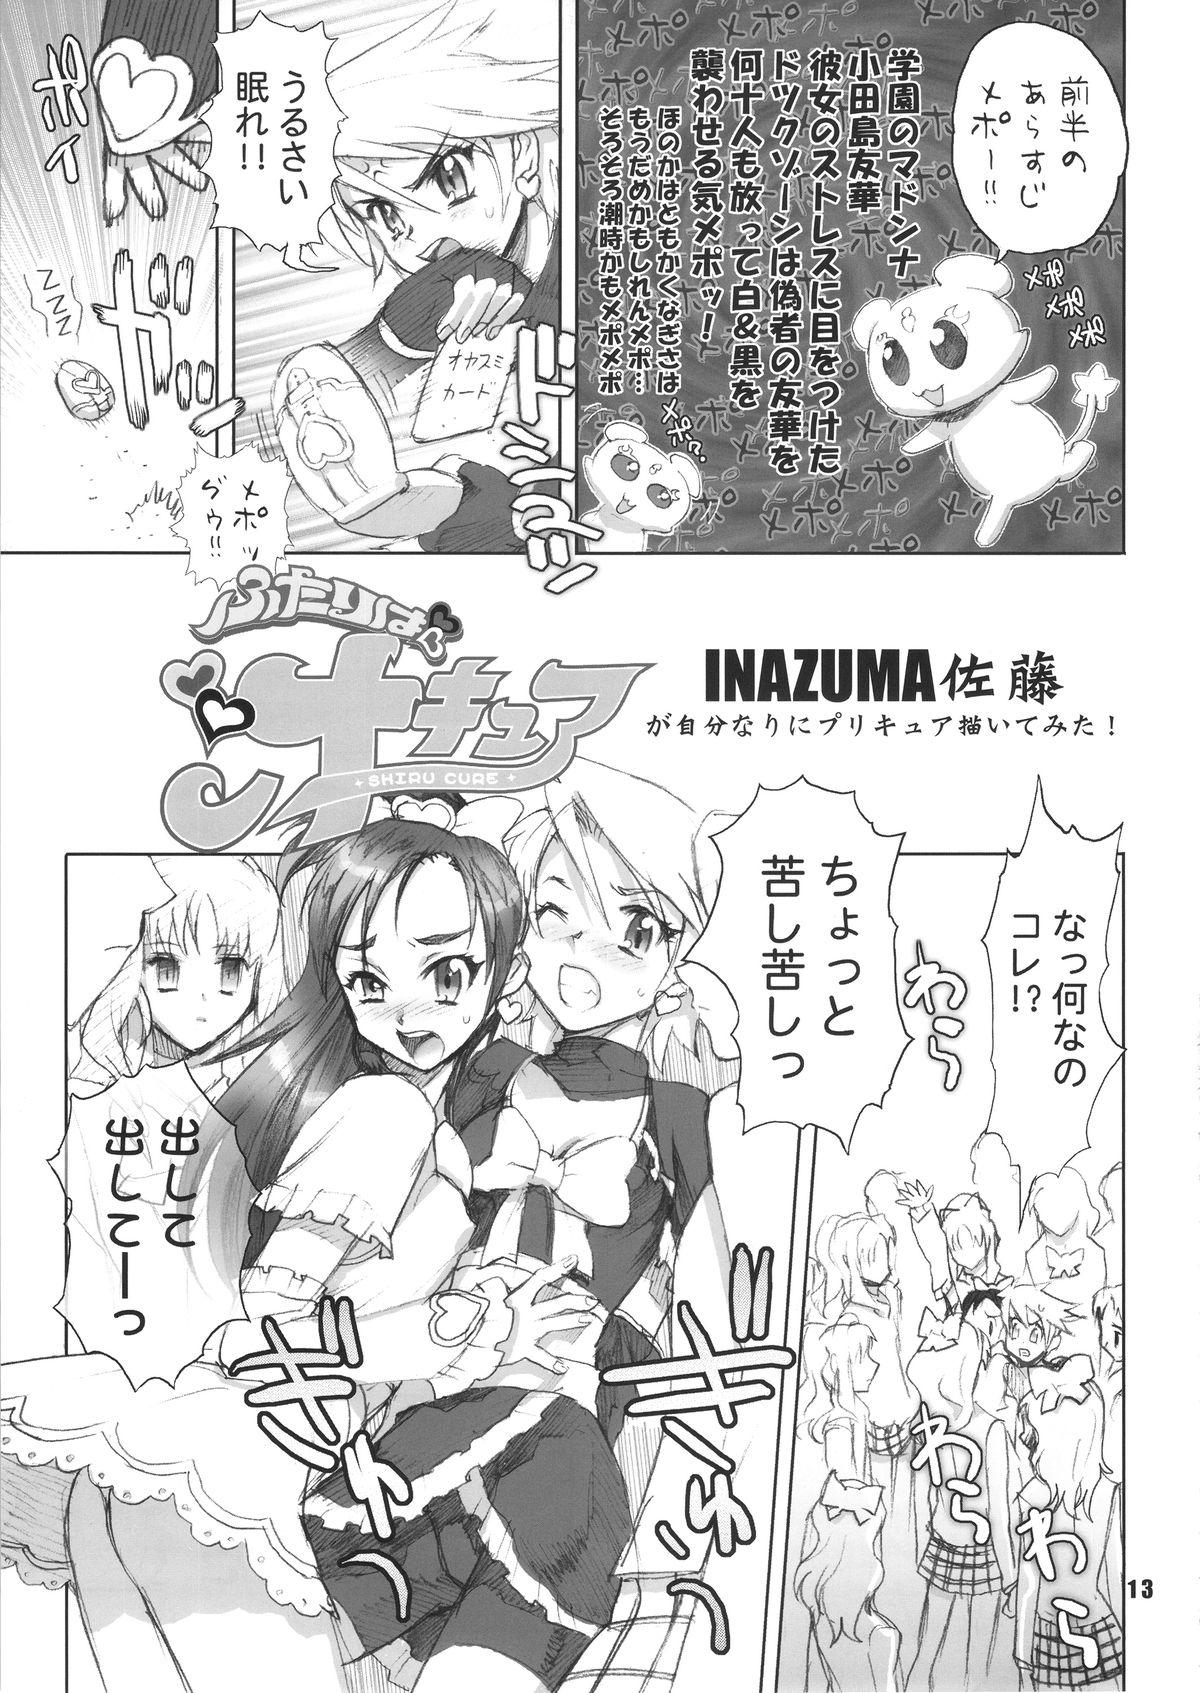 Inazuma Pretty Warrior 11